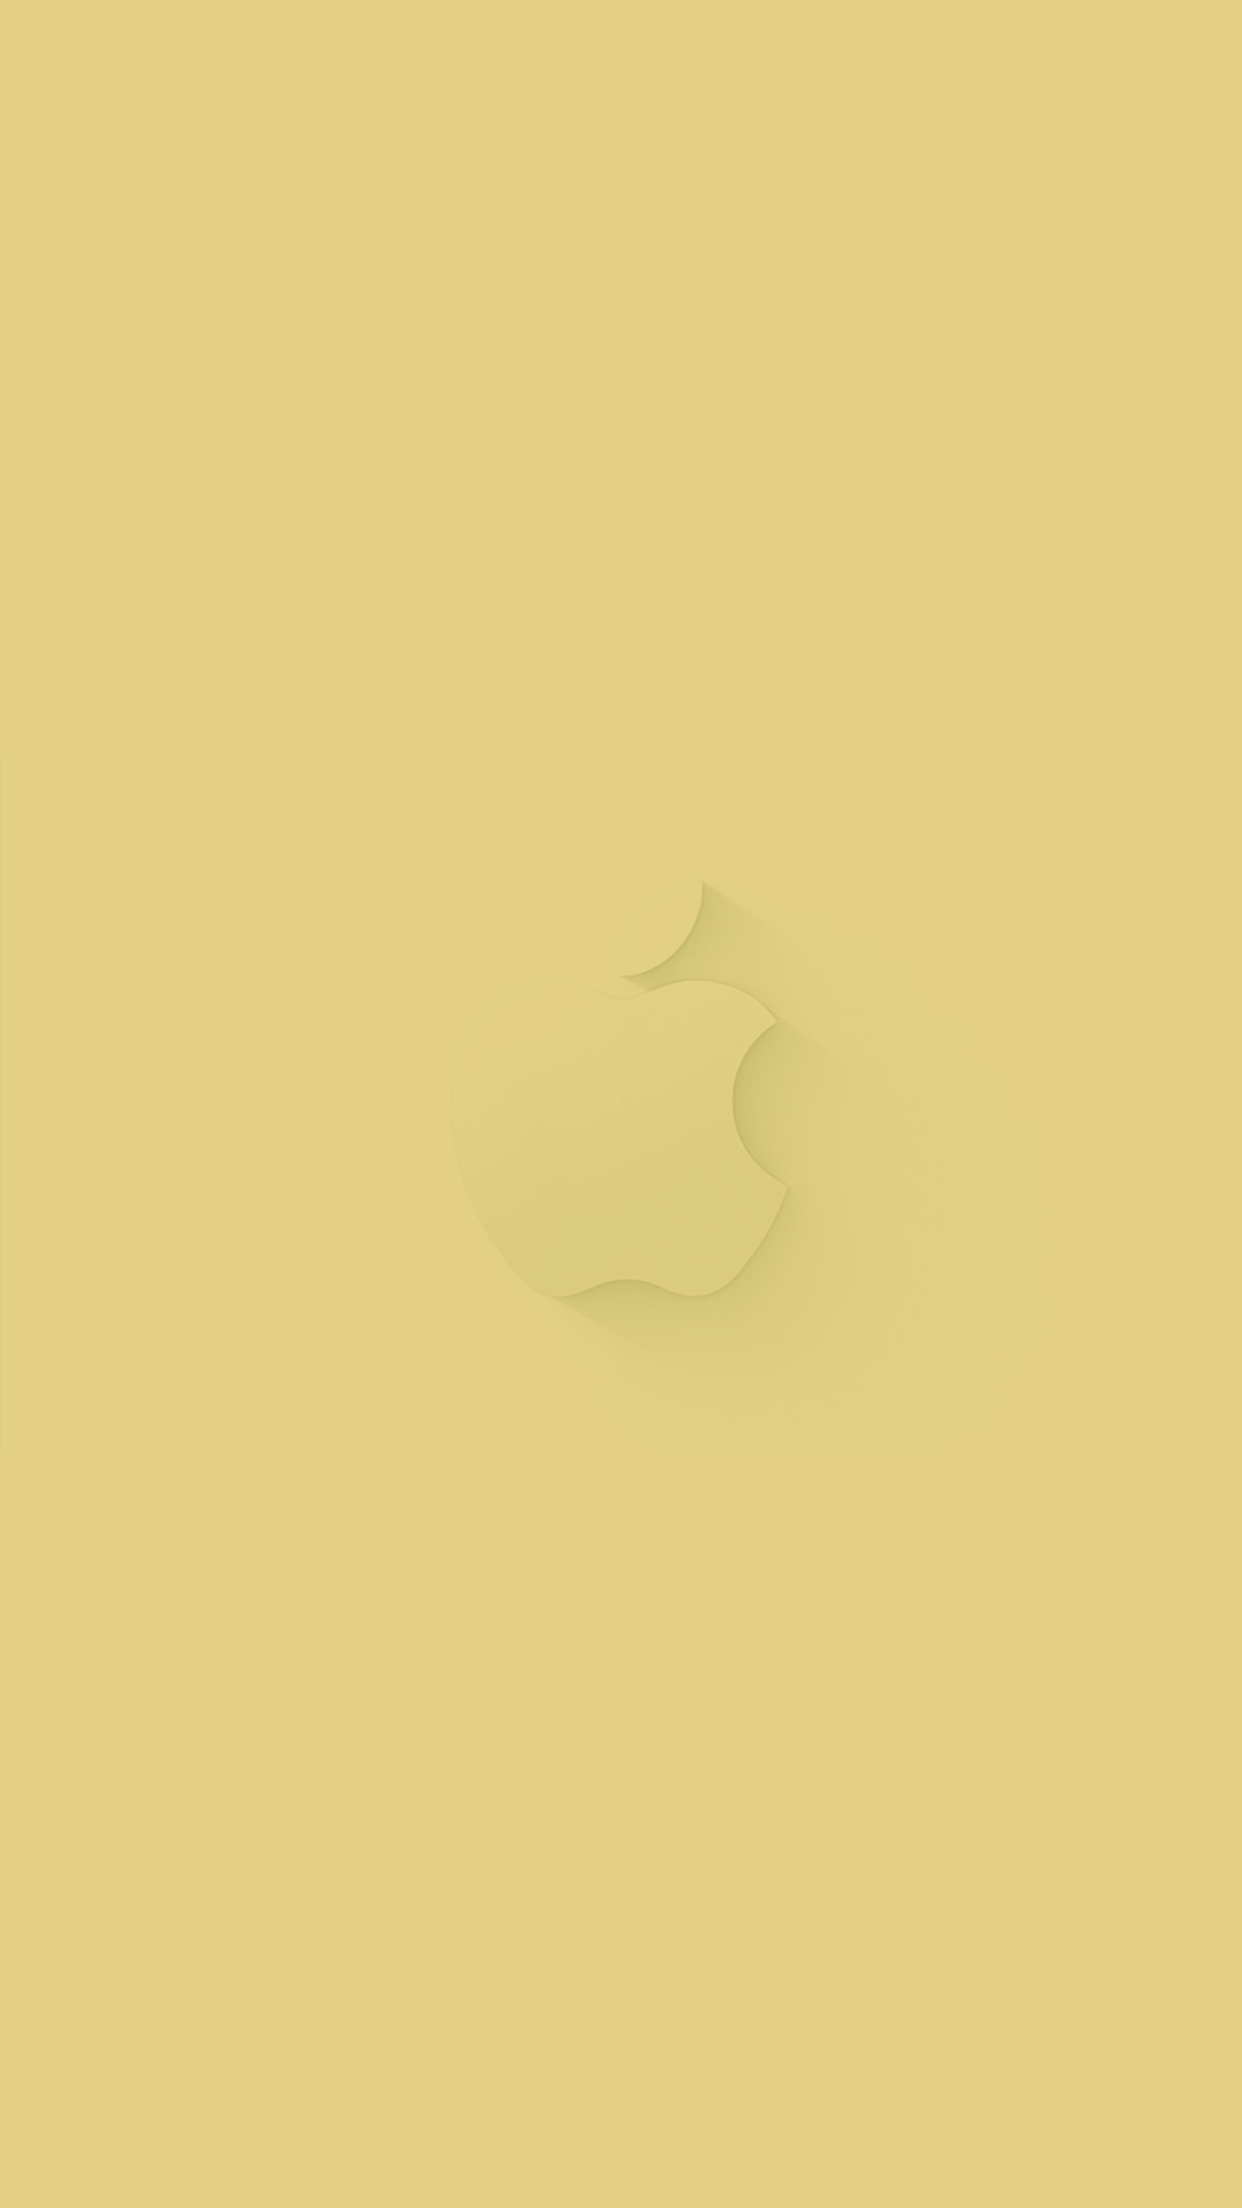 iPhone 6 Wallpaper Apple gold september2014 event plus